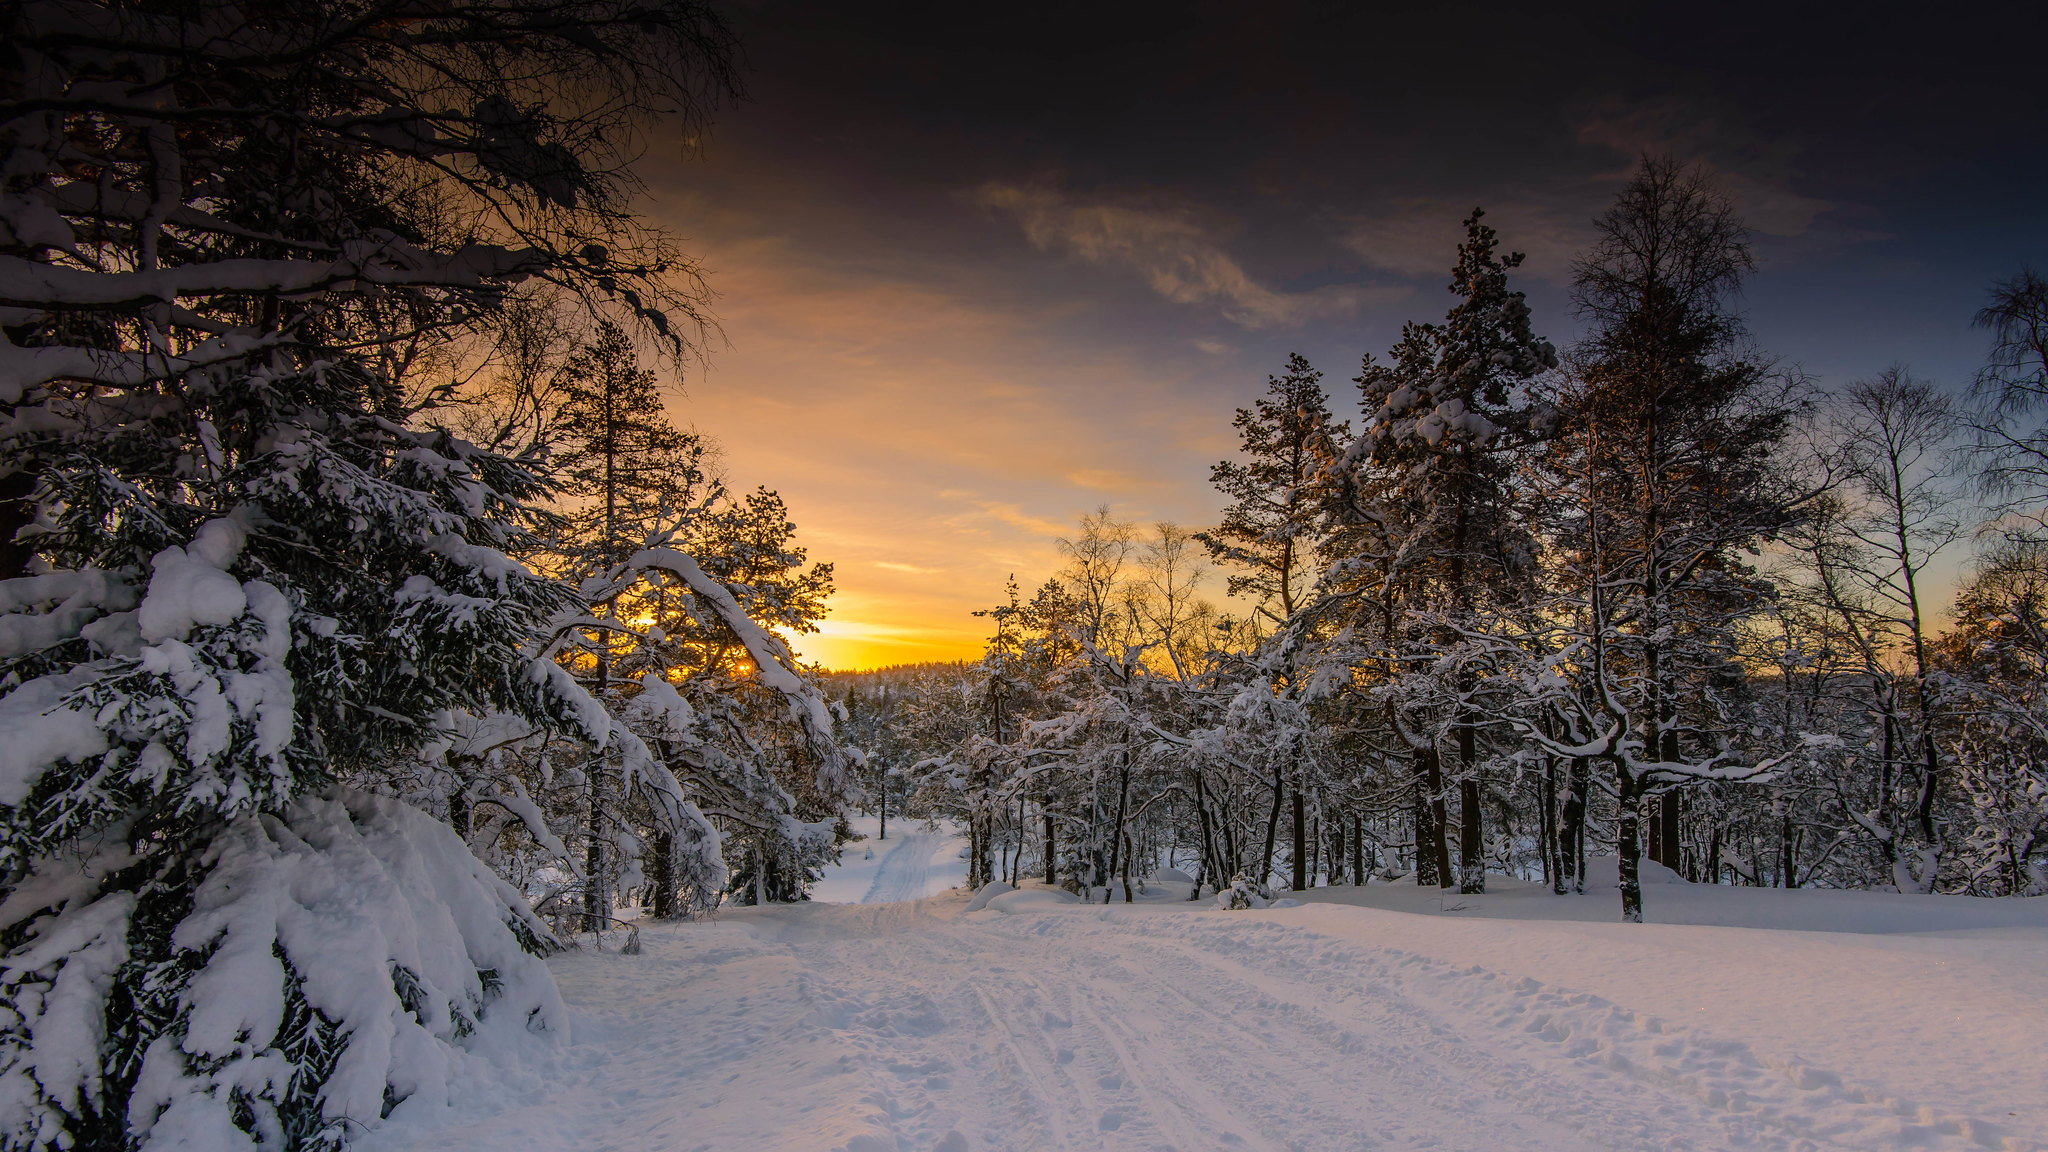 Обои Norway зима дорога на рабочий стол